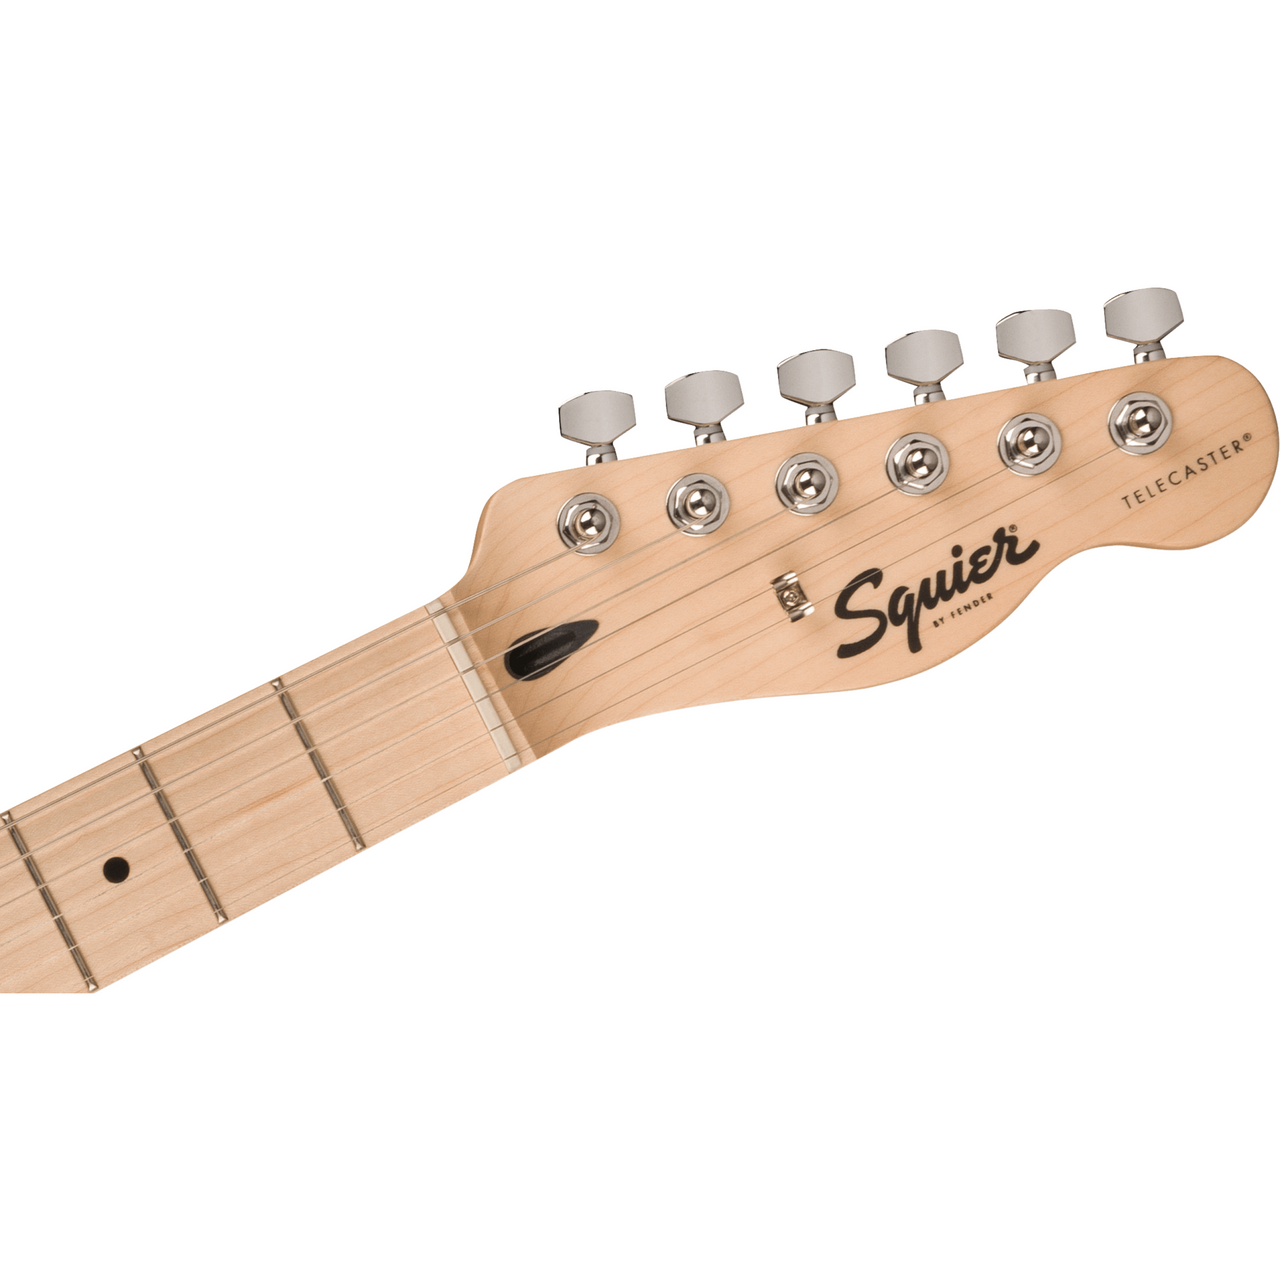 Guitarra Electrica Fender Sq Sonic Telecaster Mn Wpg Blk, 0373452506